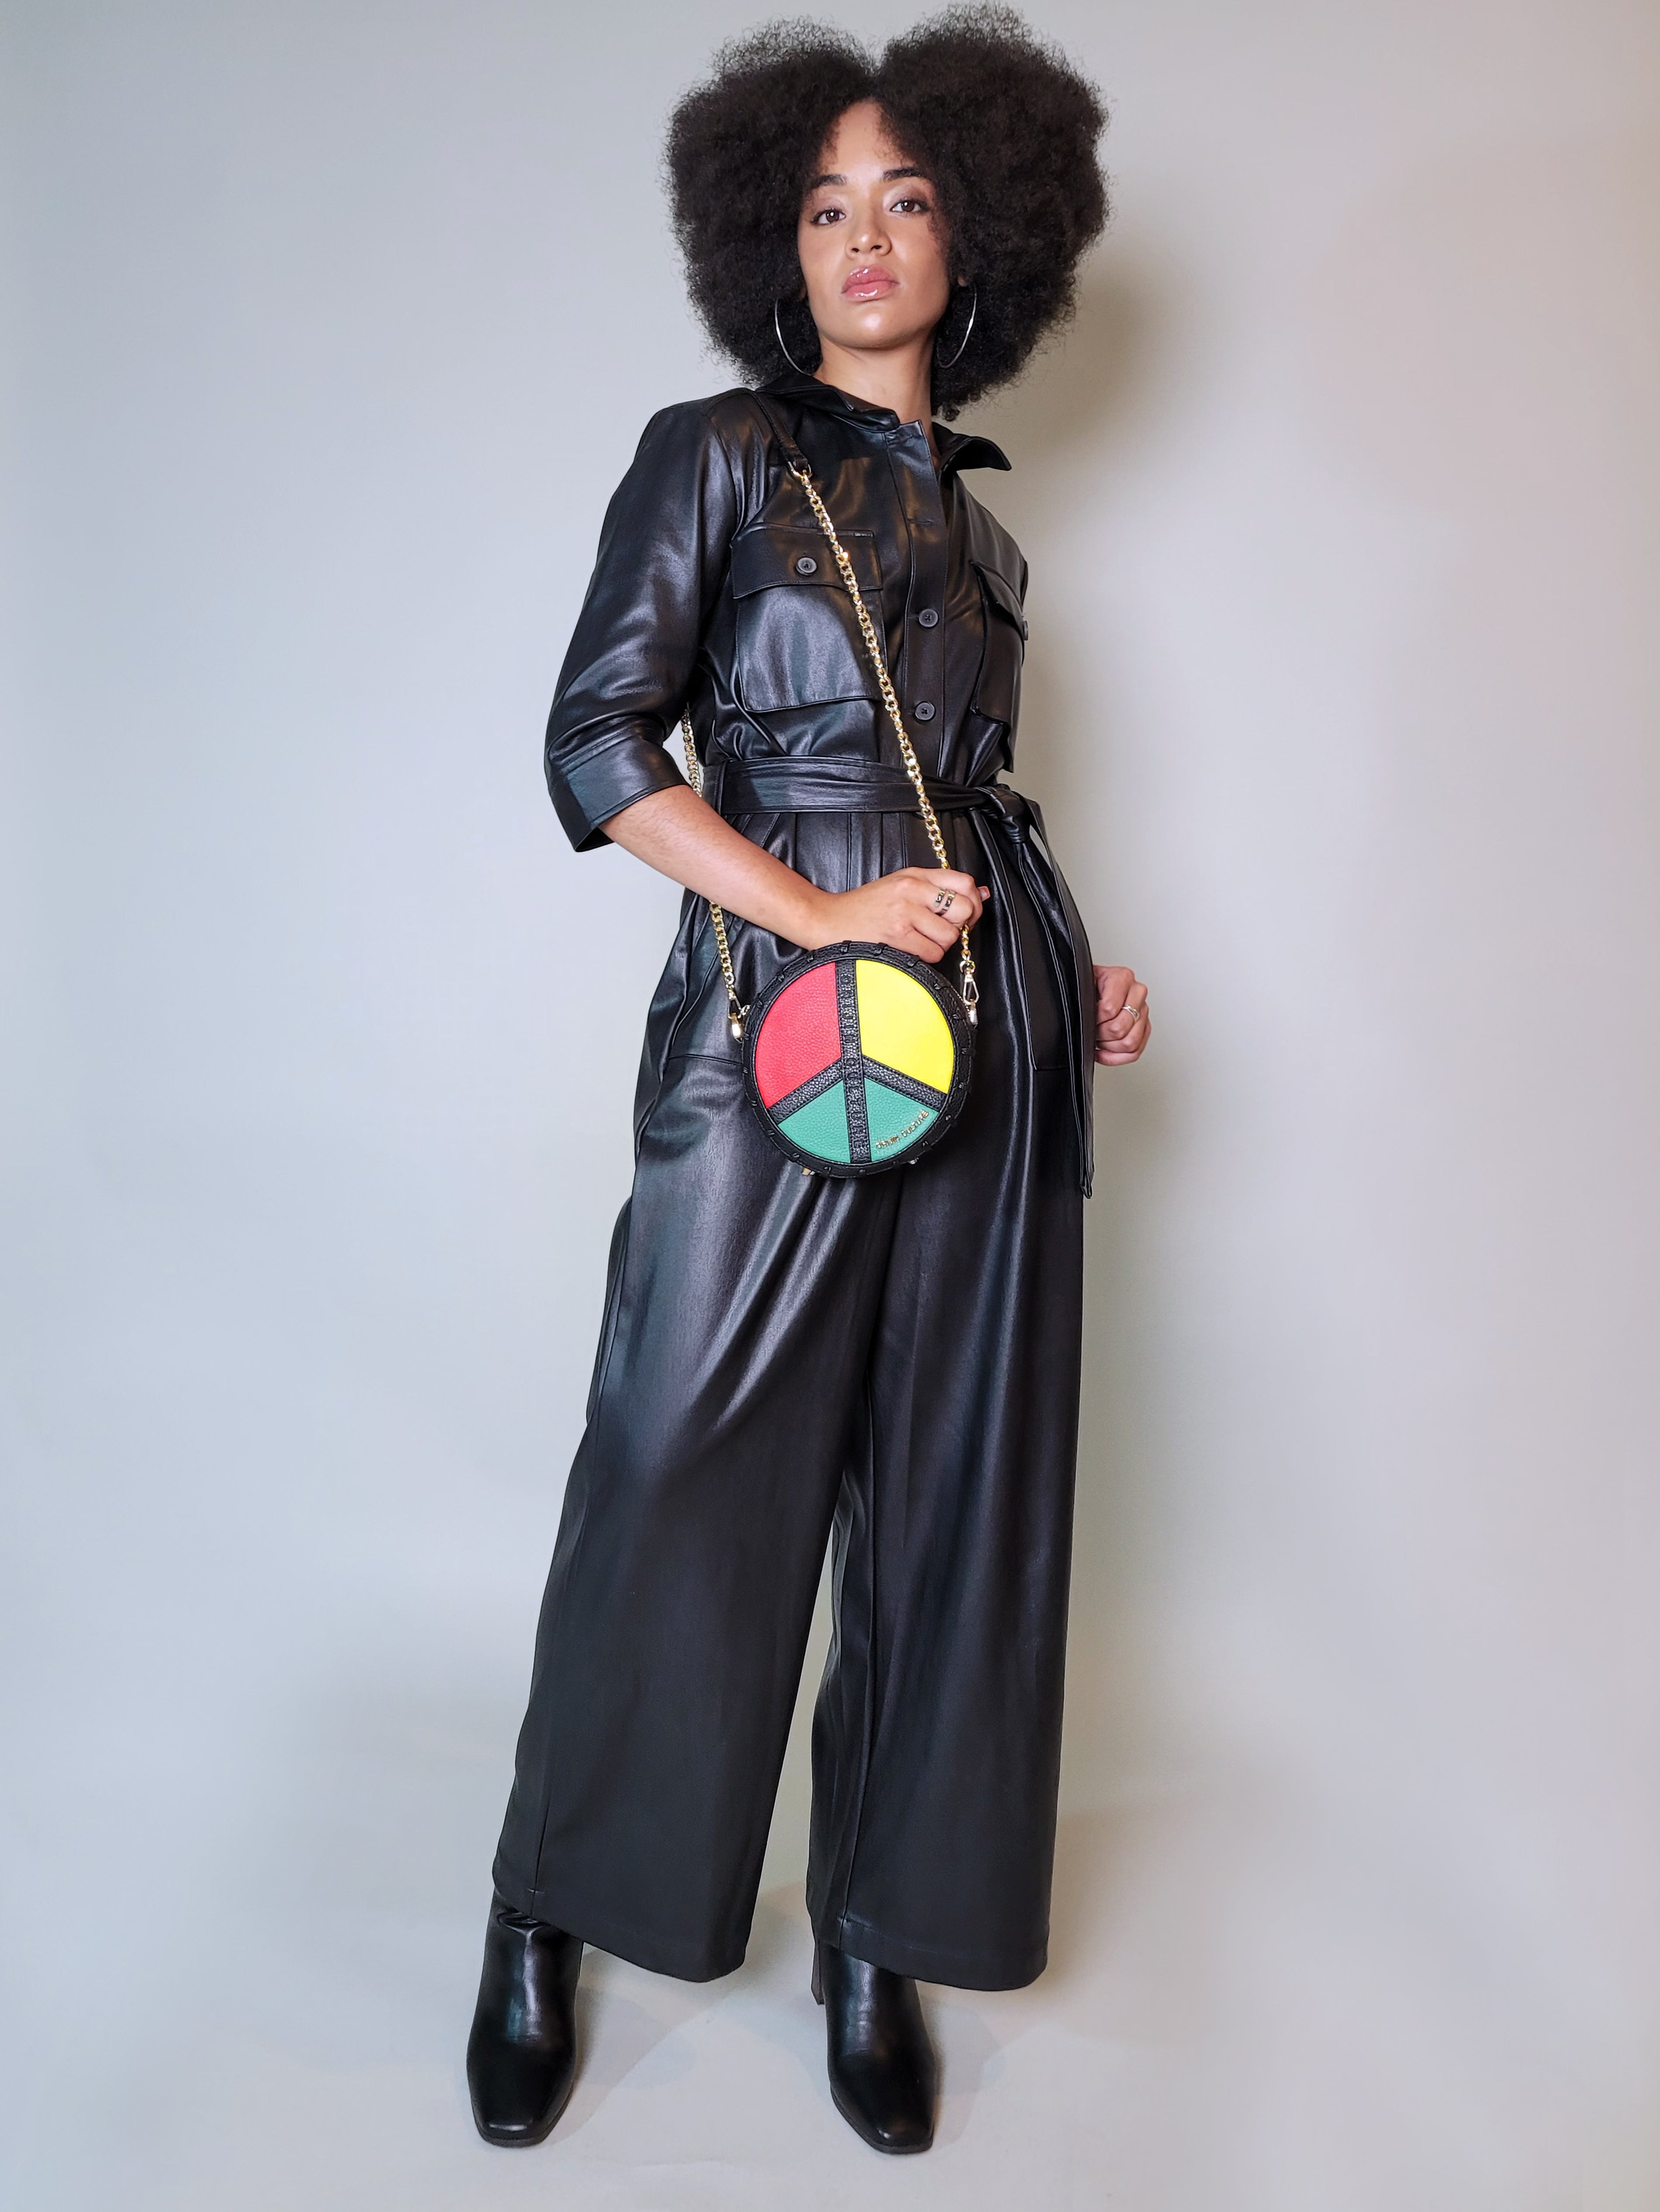 Kohl's Faux Leather Crossbody Bags for Women